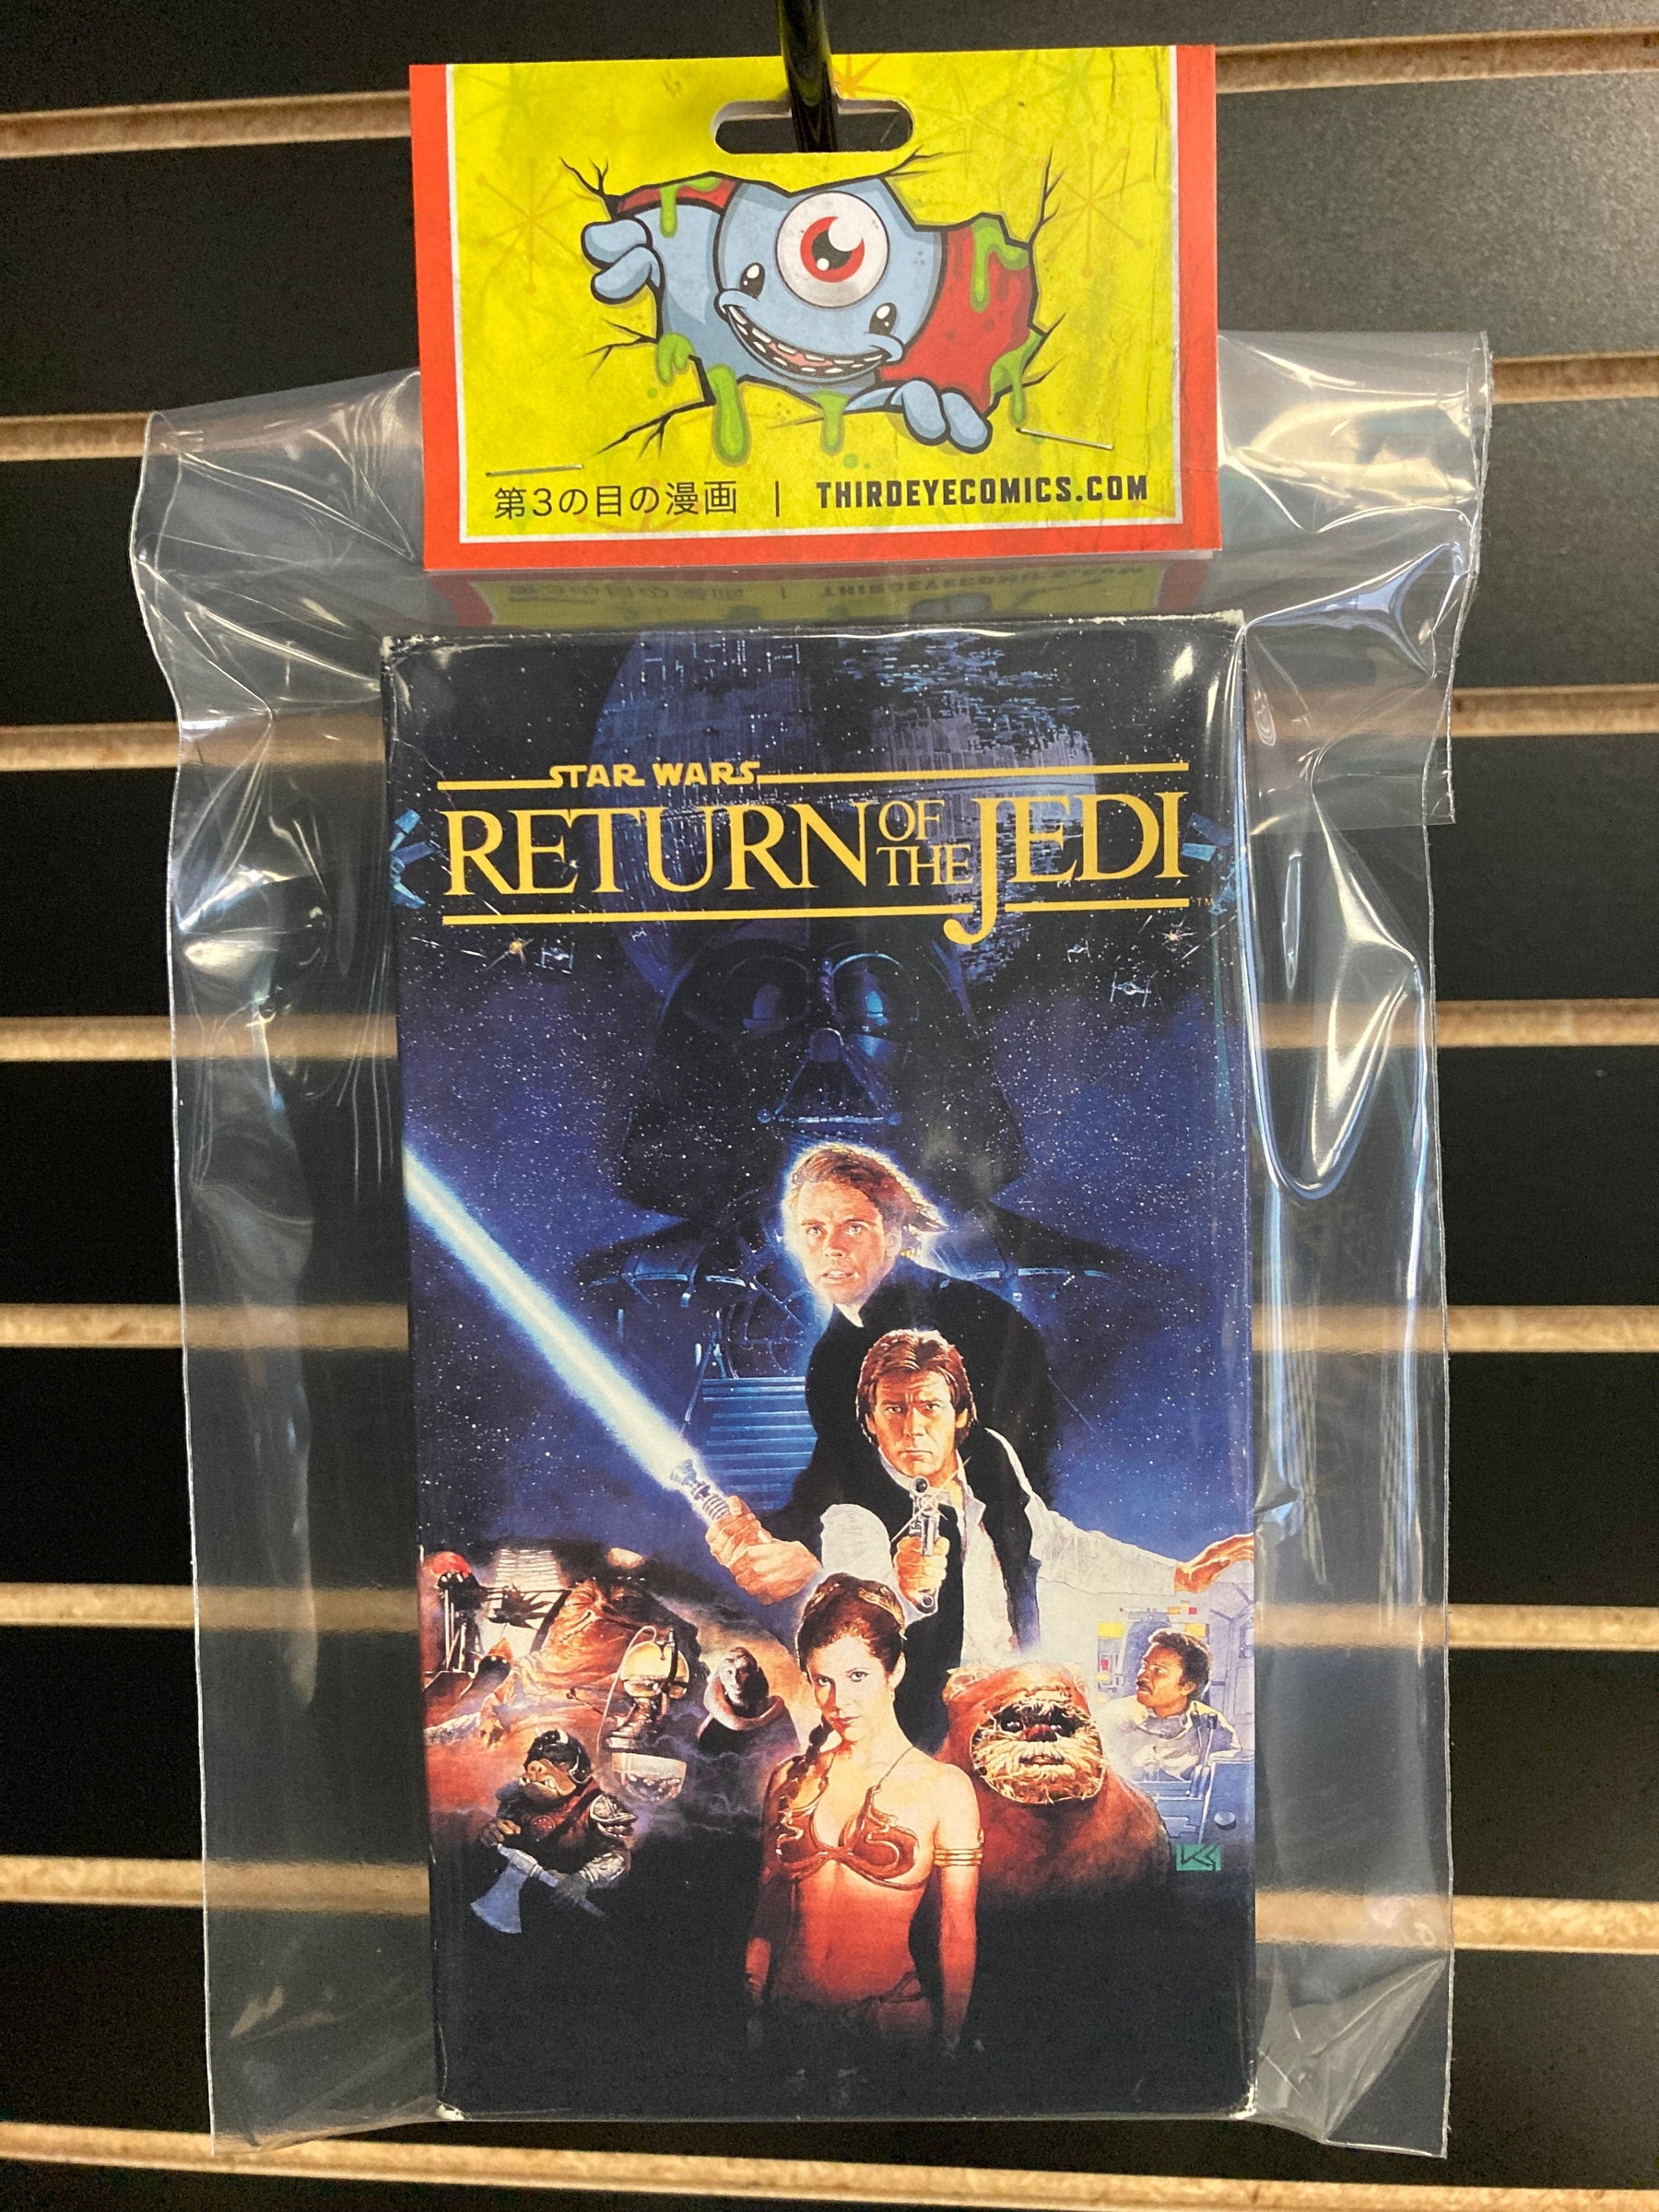 VHS: Star Wars - Return of the Jedi - Third Eye